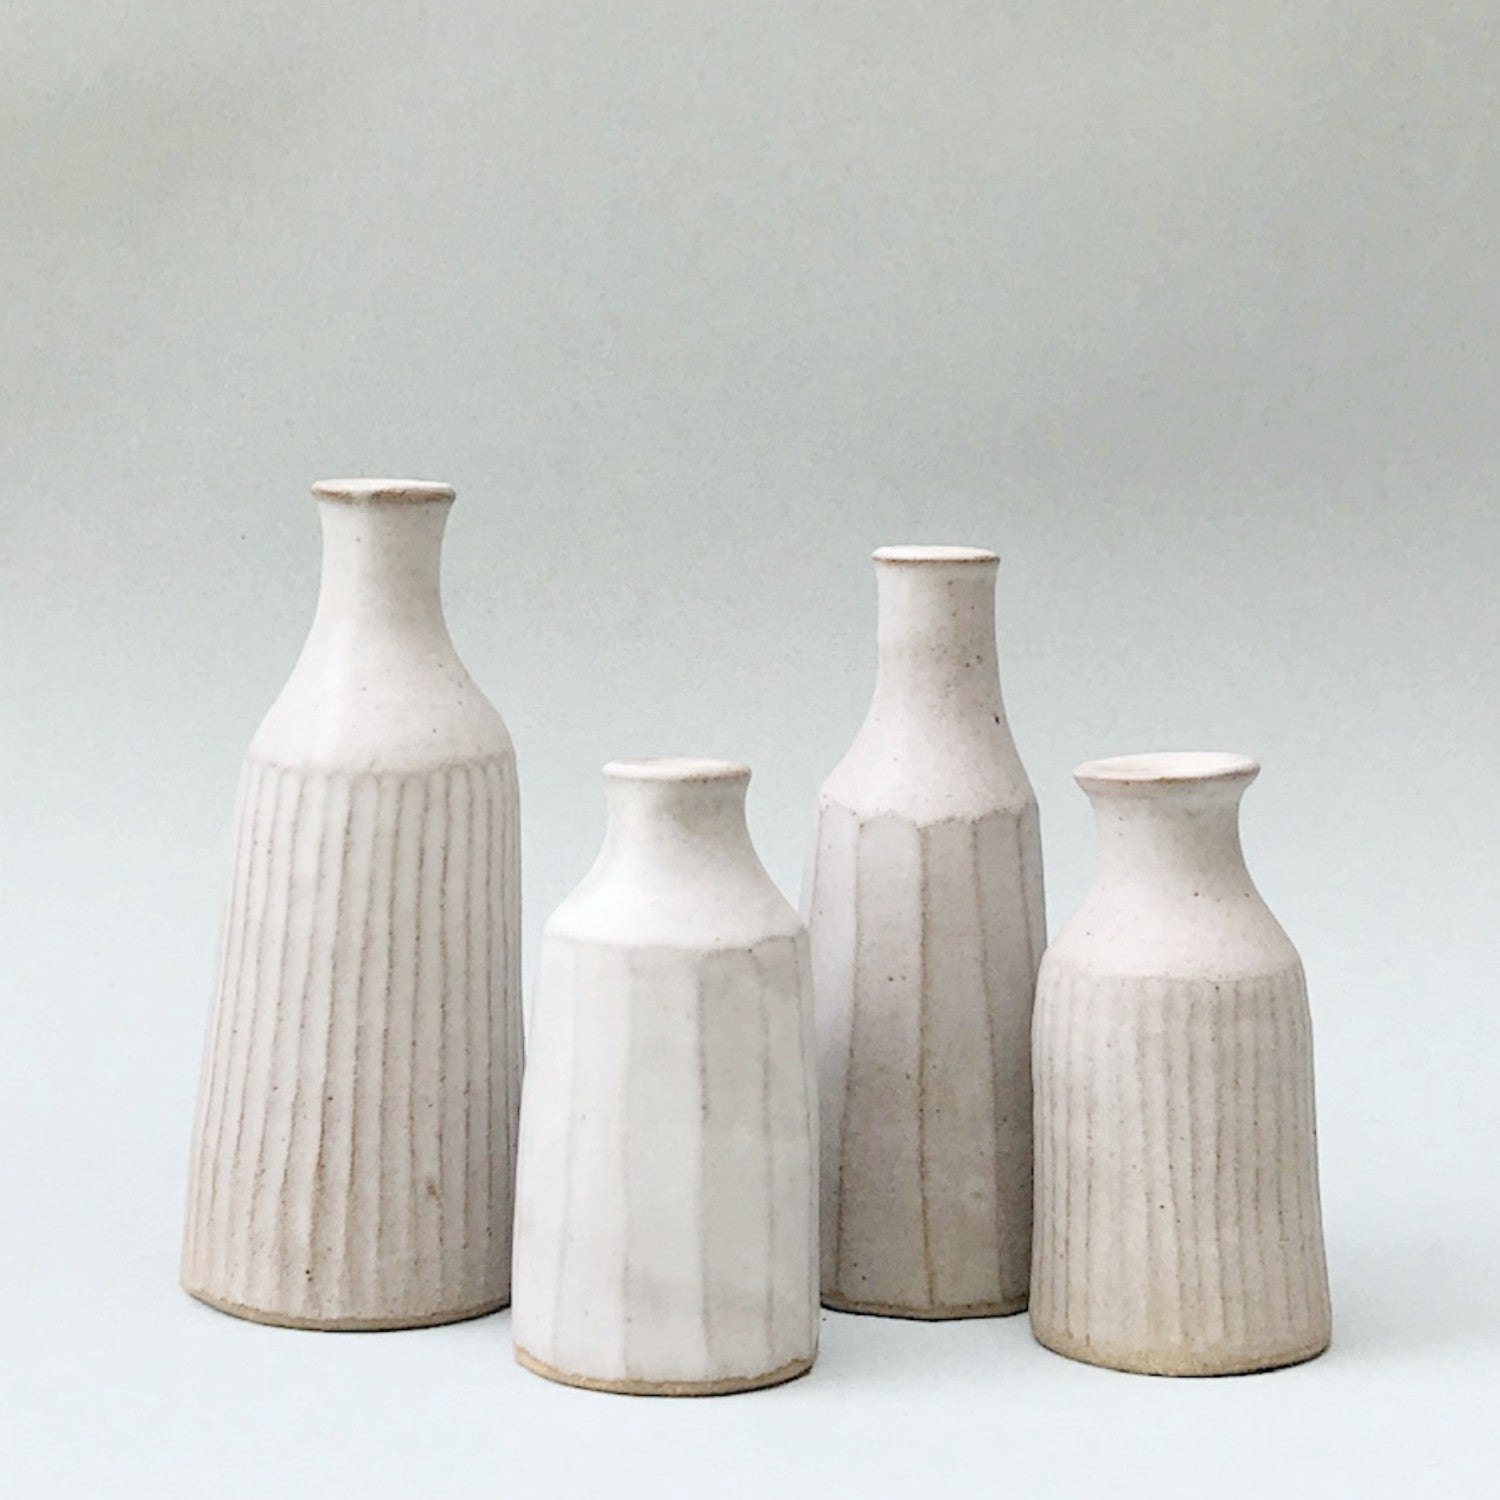 The Very Less The Very Less Medium Bottle Vase (Single) 2